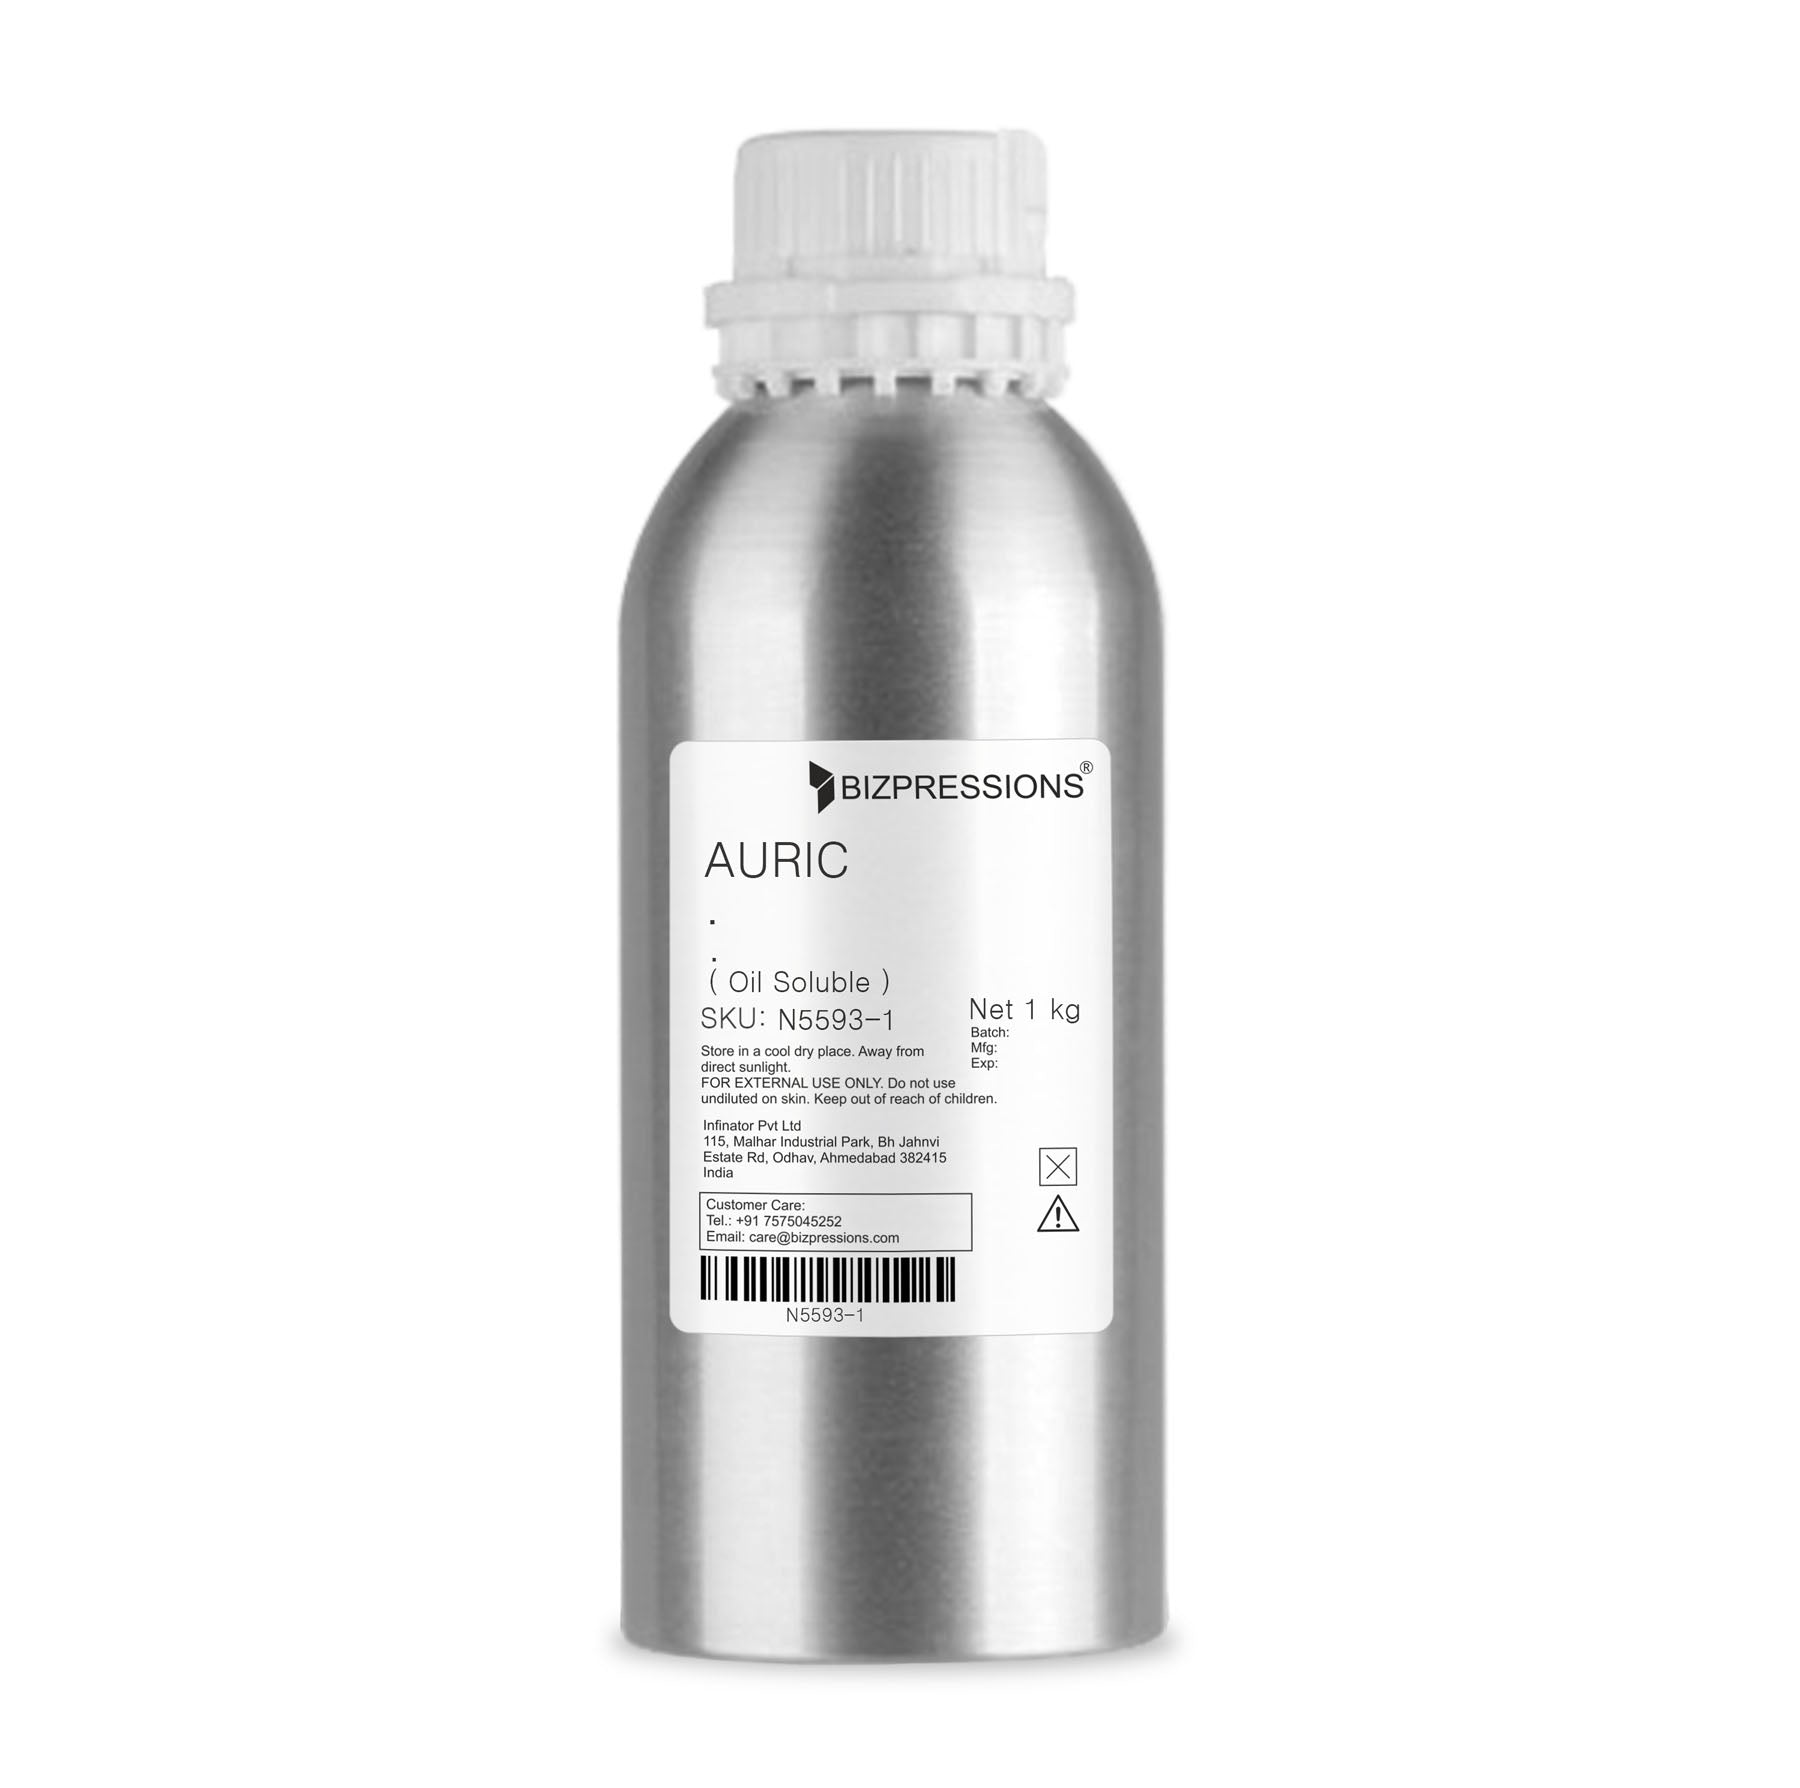 AURIC - Fragrance ( Oil Soluble ) - 1 kg